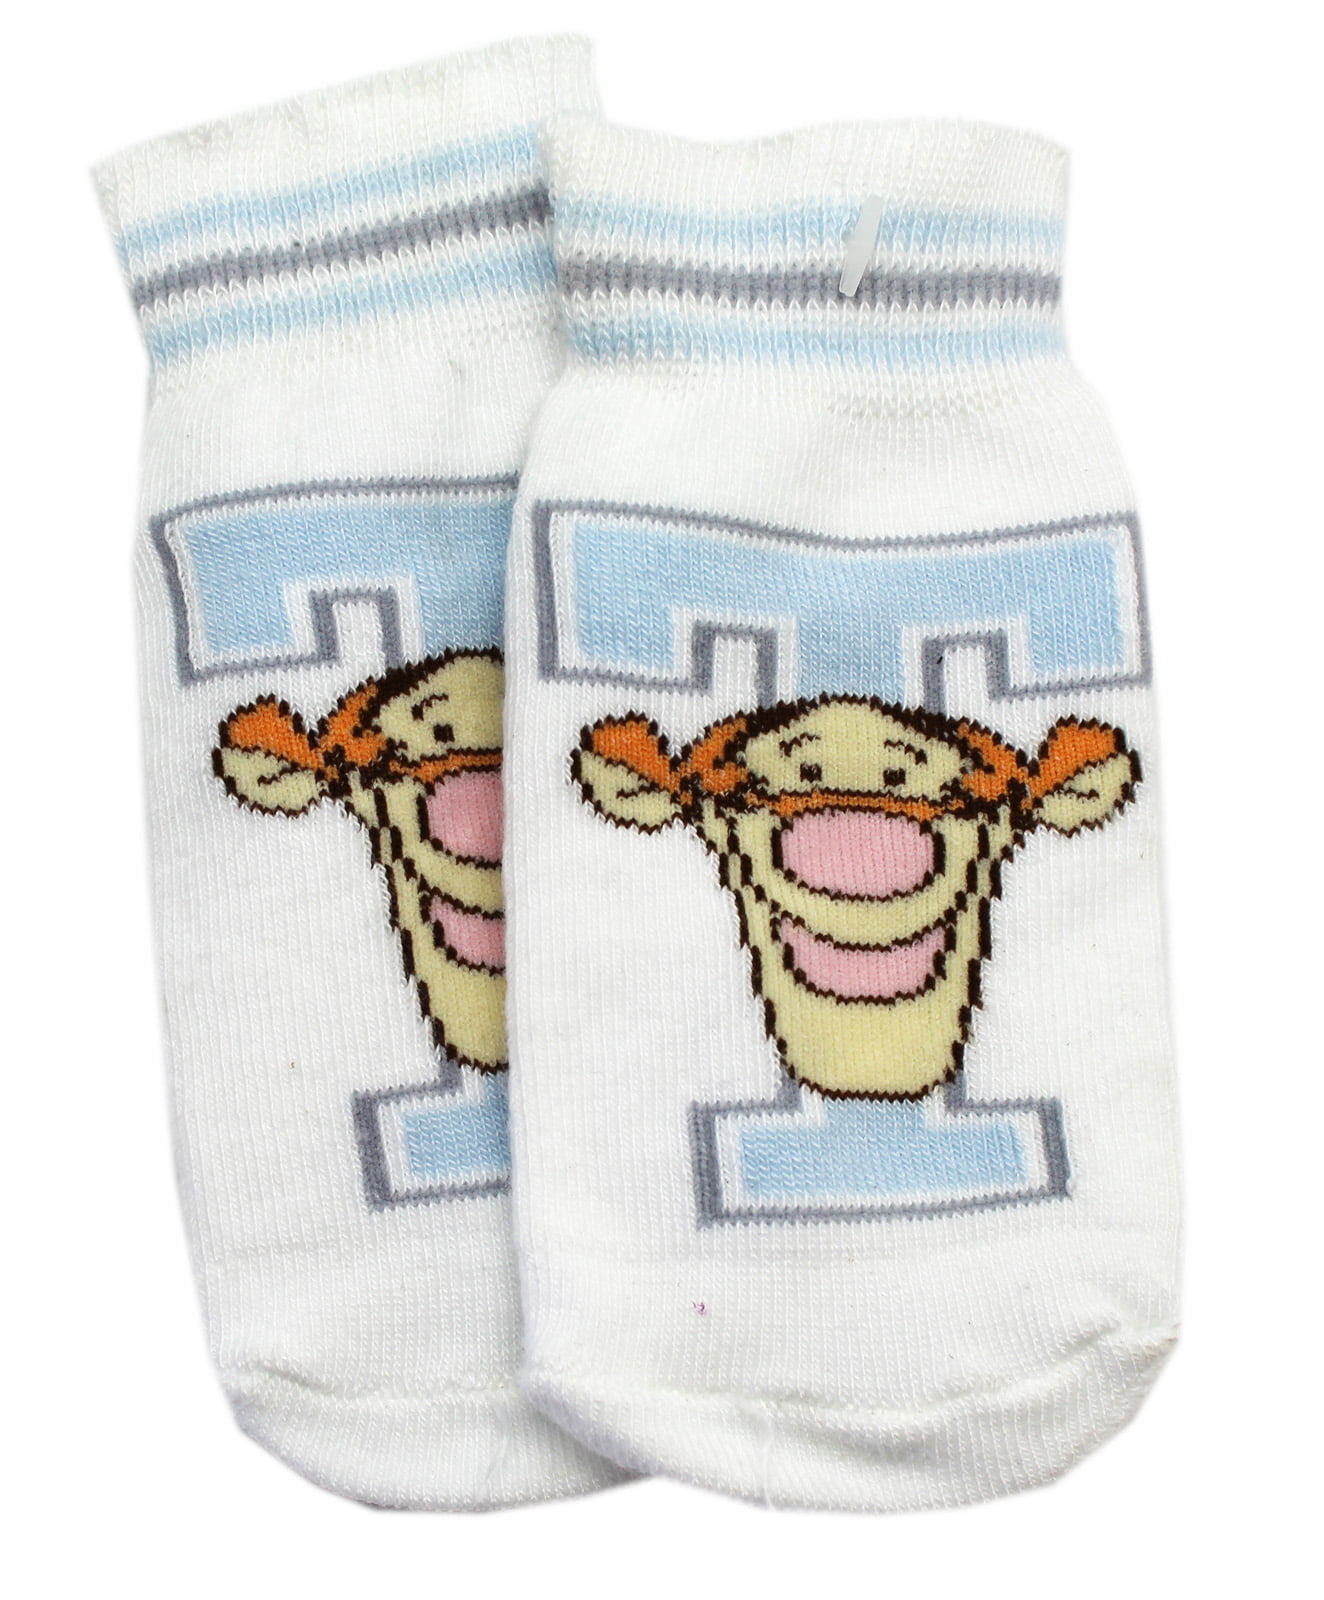 12-24M New Disney Winnie the Pooh Leg Warmer or 3 Pair Ankle Grip Socks 2T 4T 